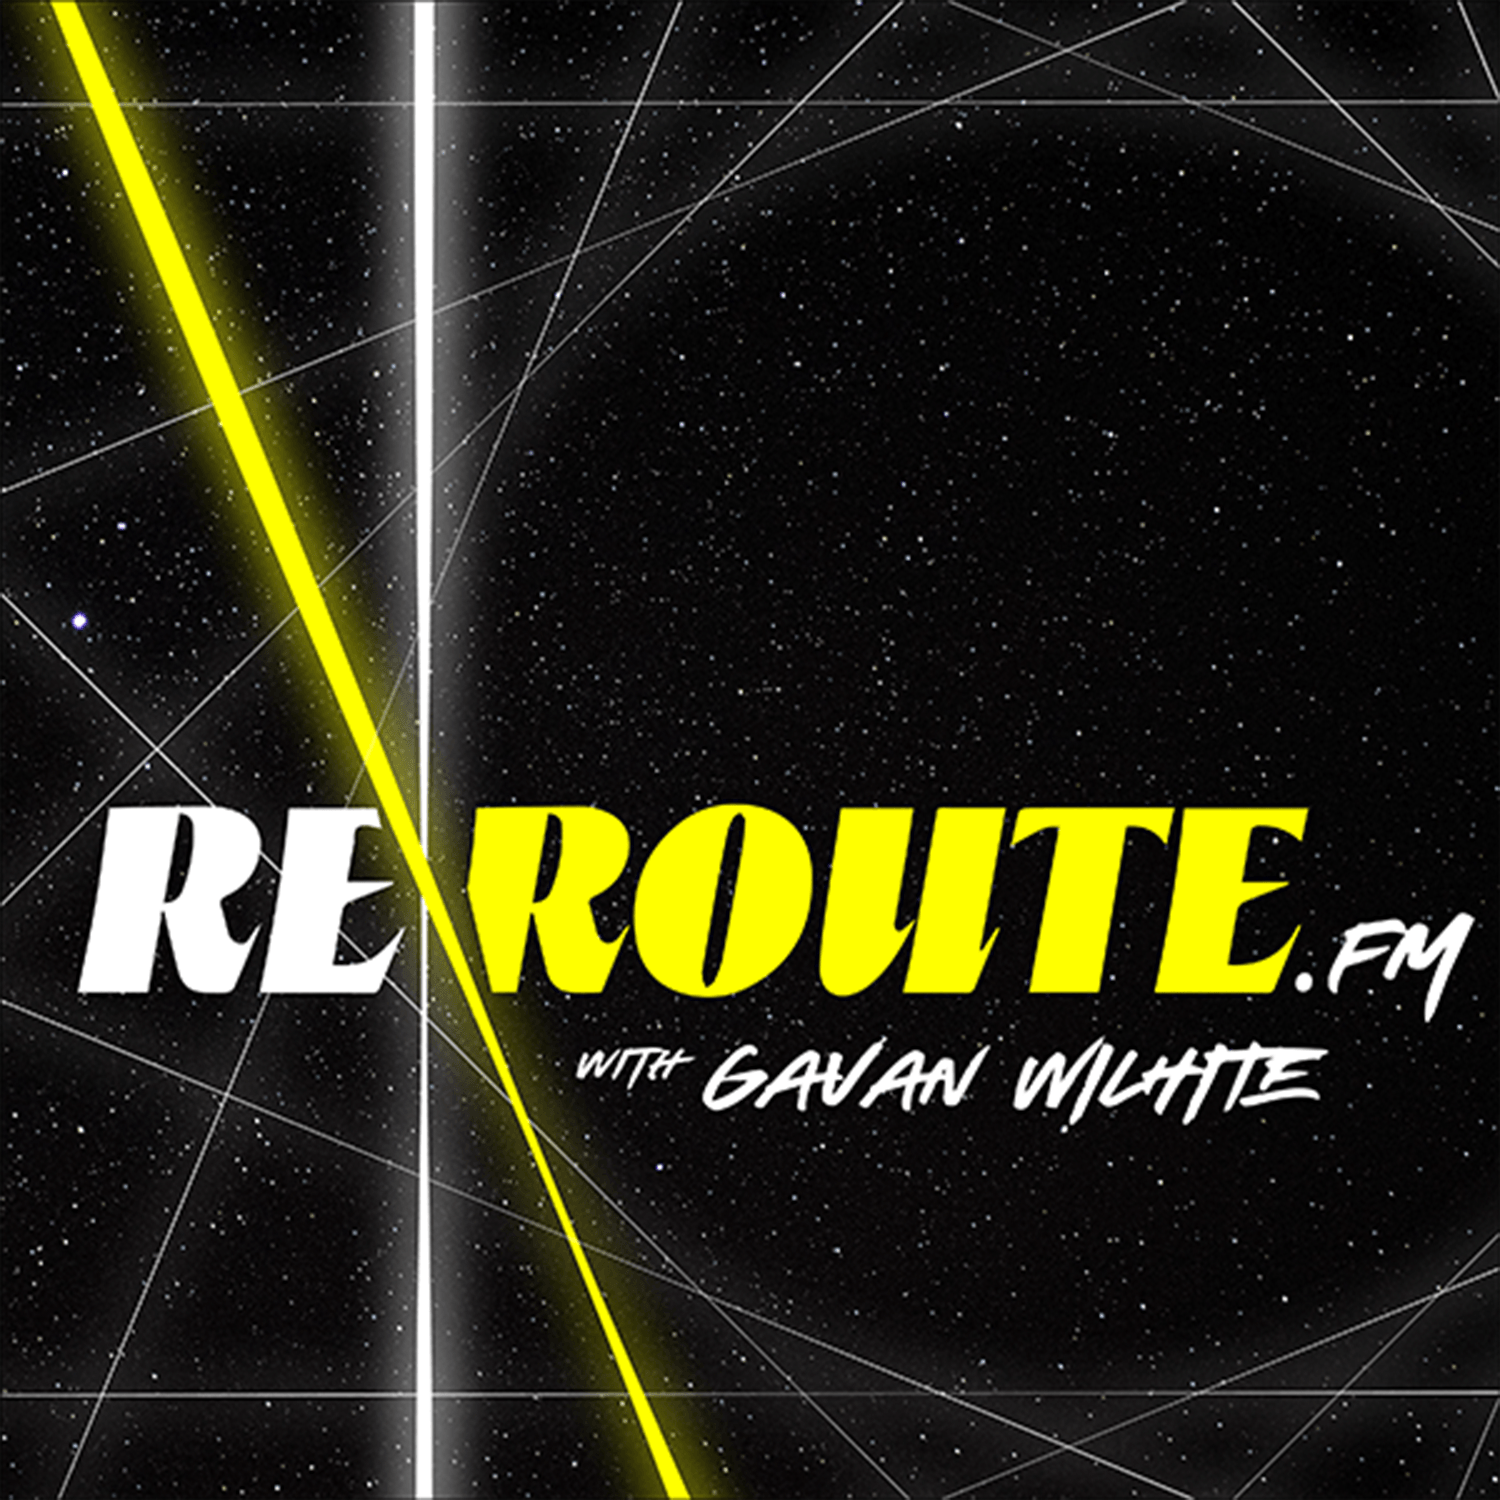 Artwork for podcast REROUTE.FM